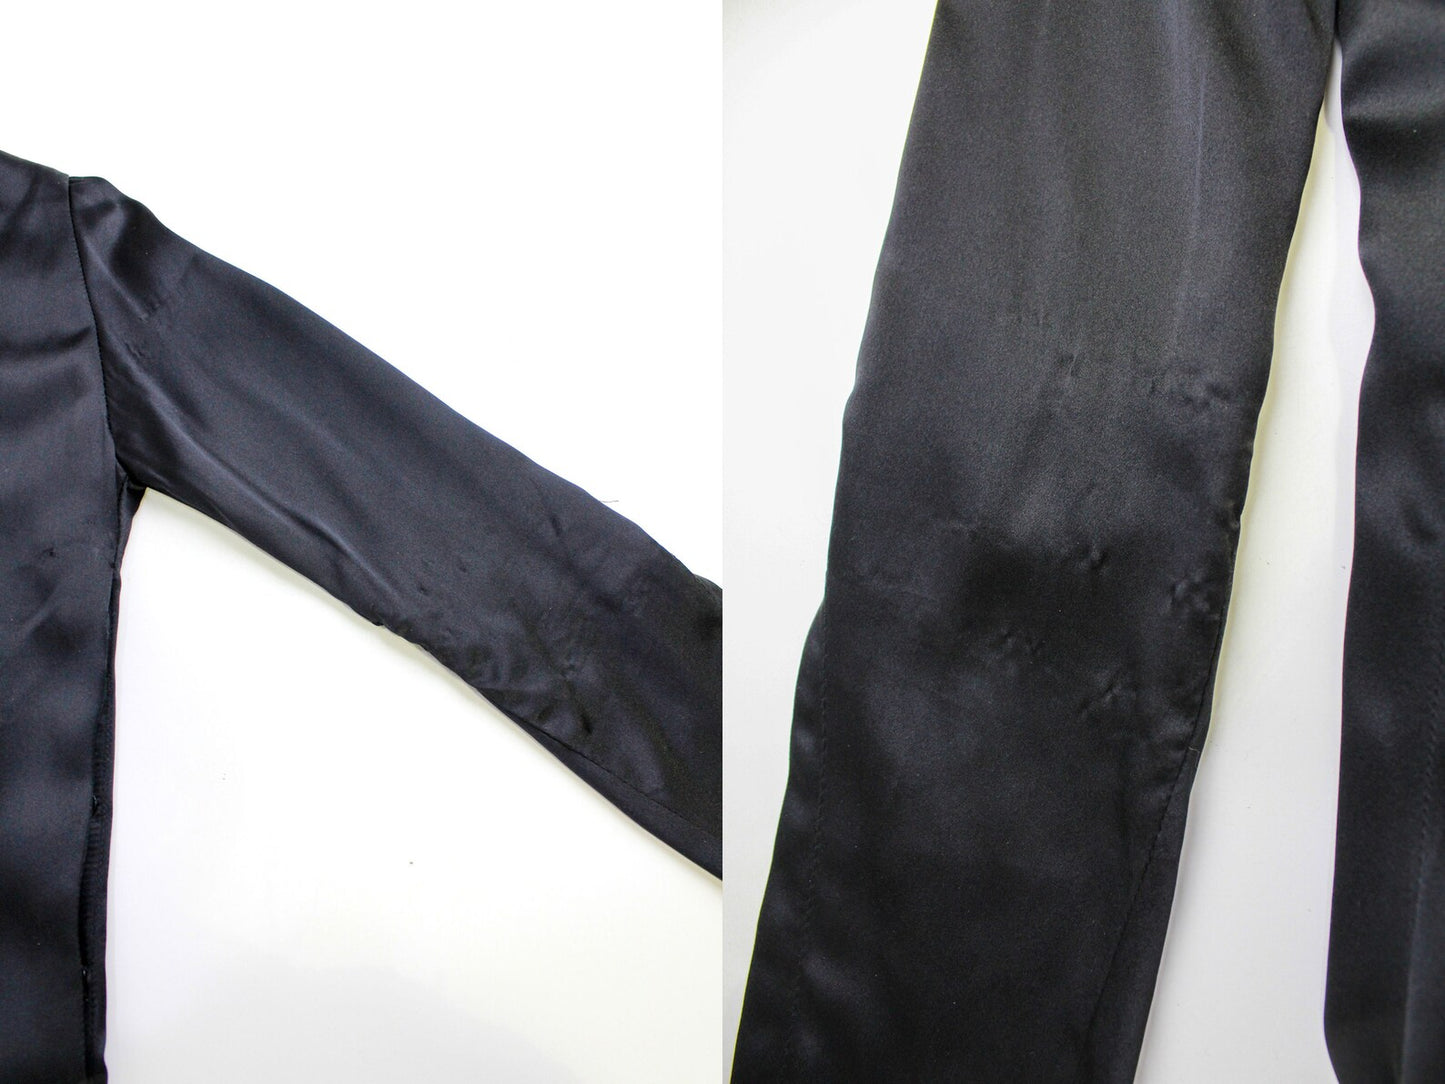 Reproduction 1930s style Black Liquid Satin Long Sleeve Tunic Dress, Small. Ian Drummond Vintage.